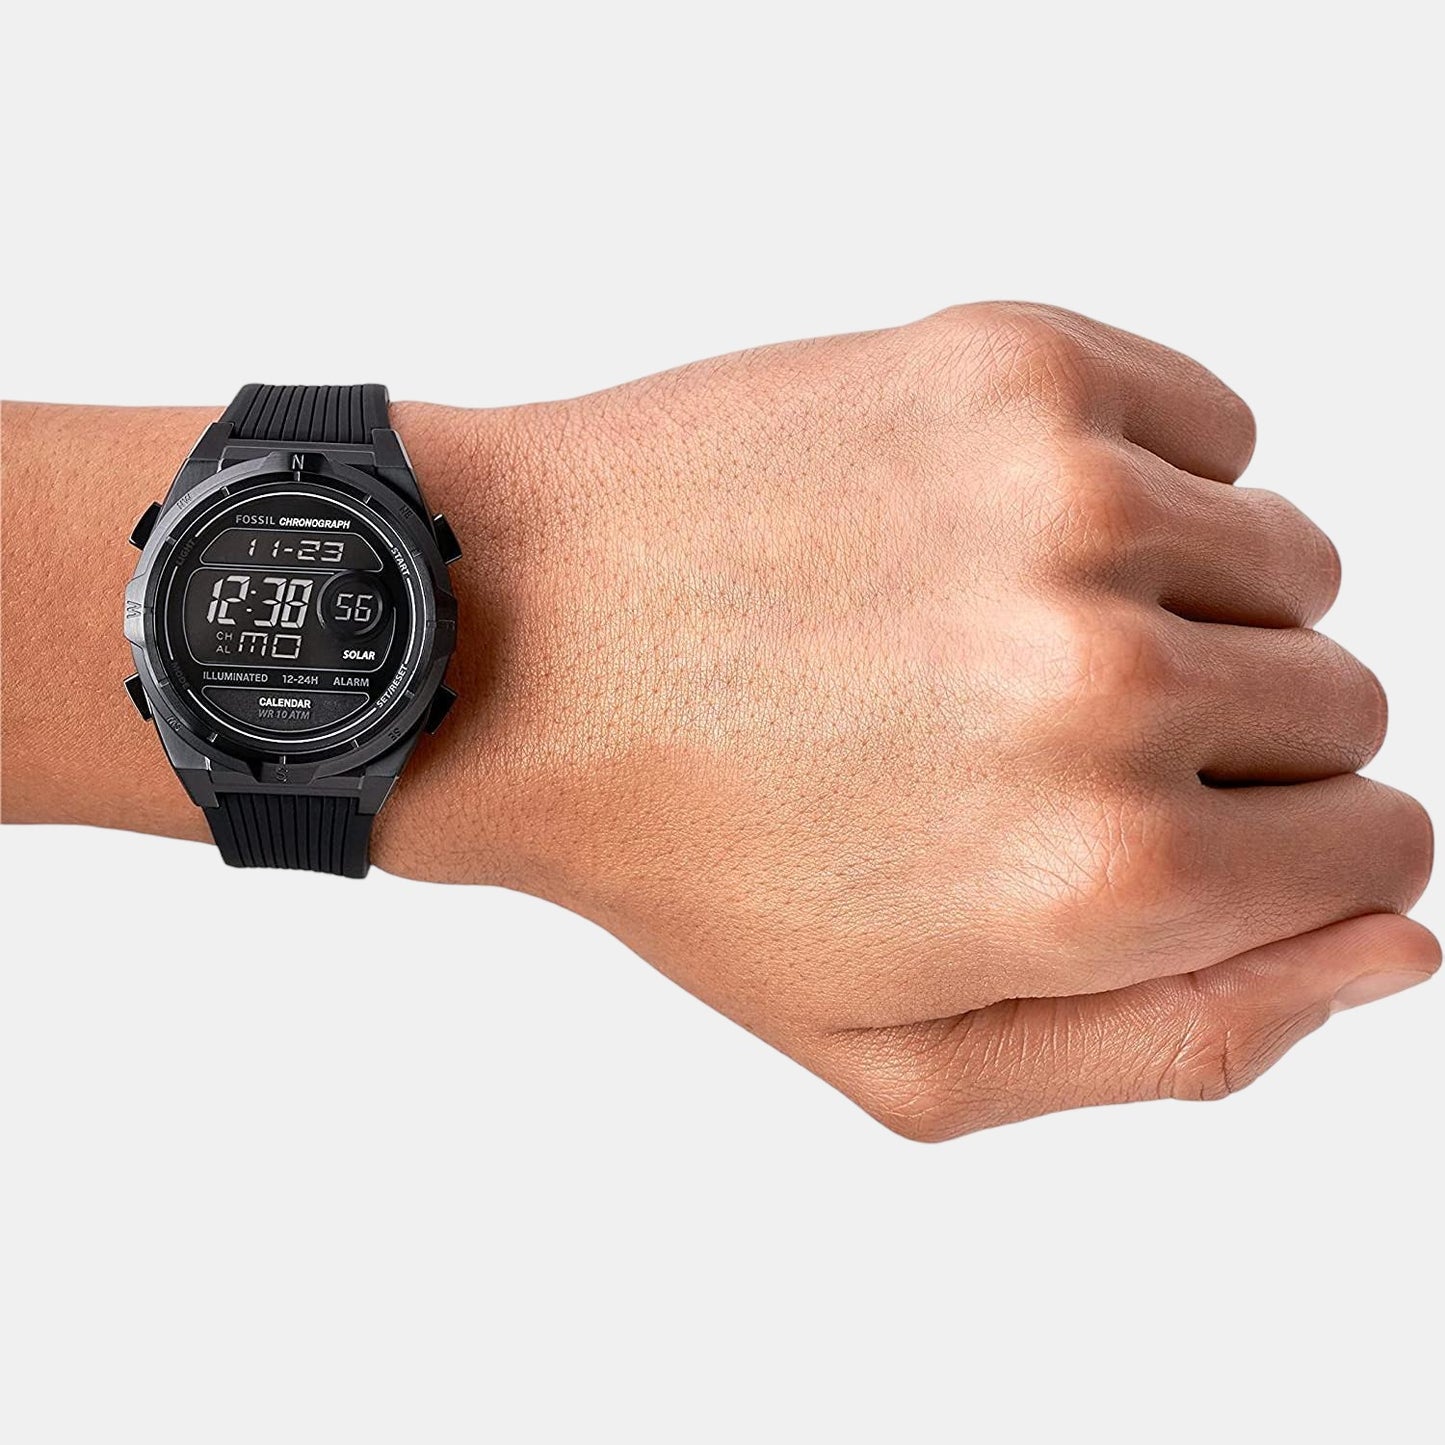 Male Black Digital Silicon Automatic Watch FS5859